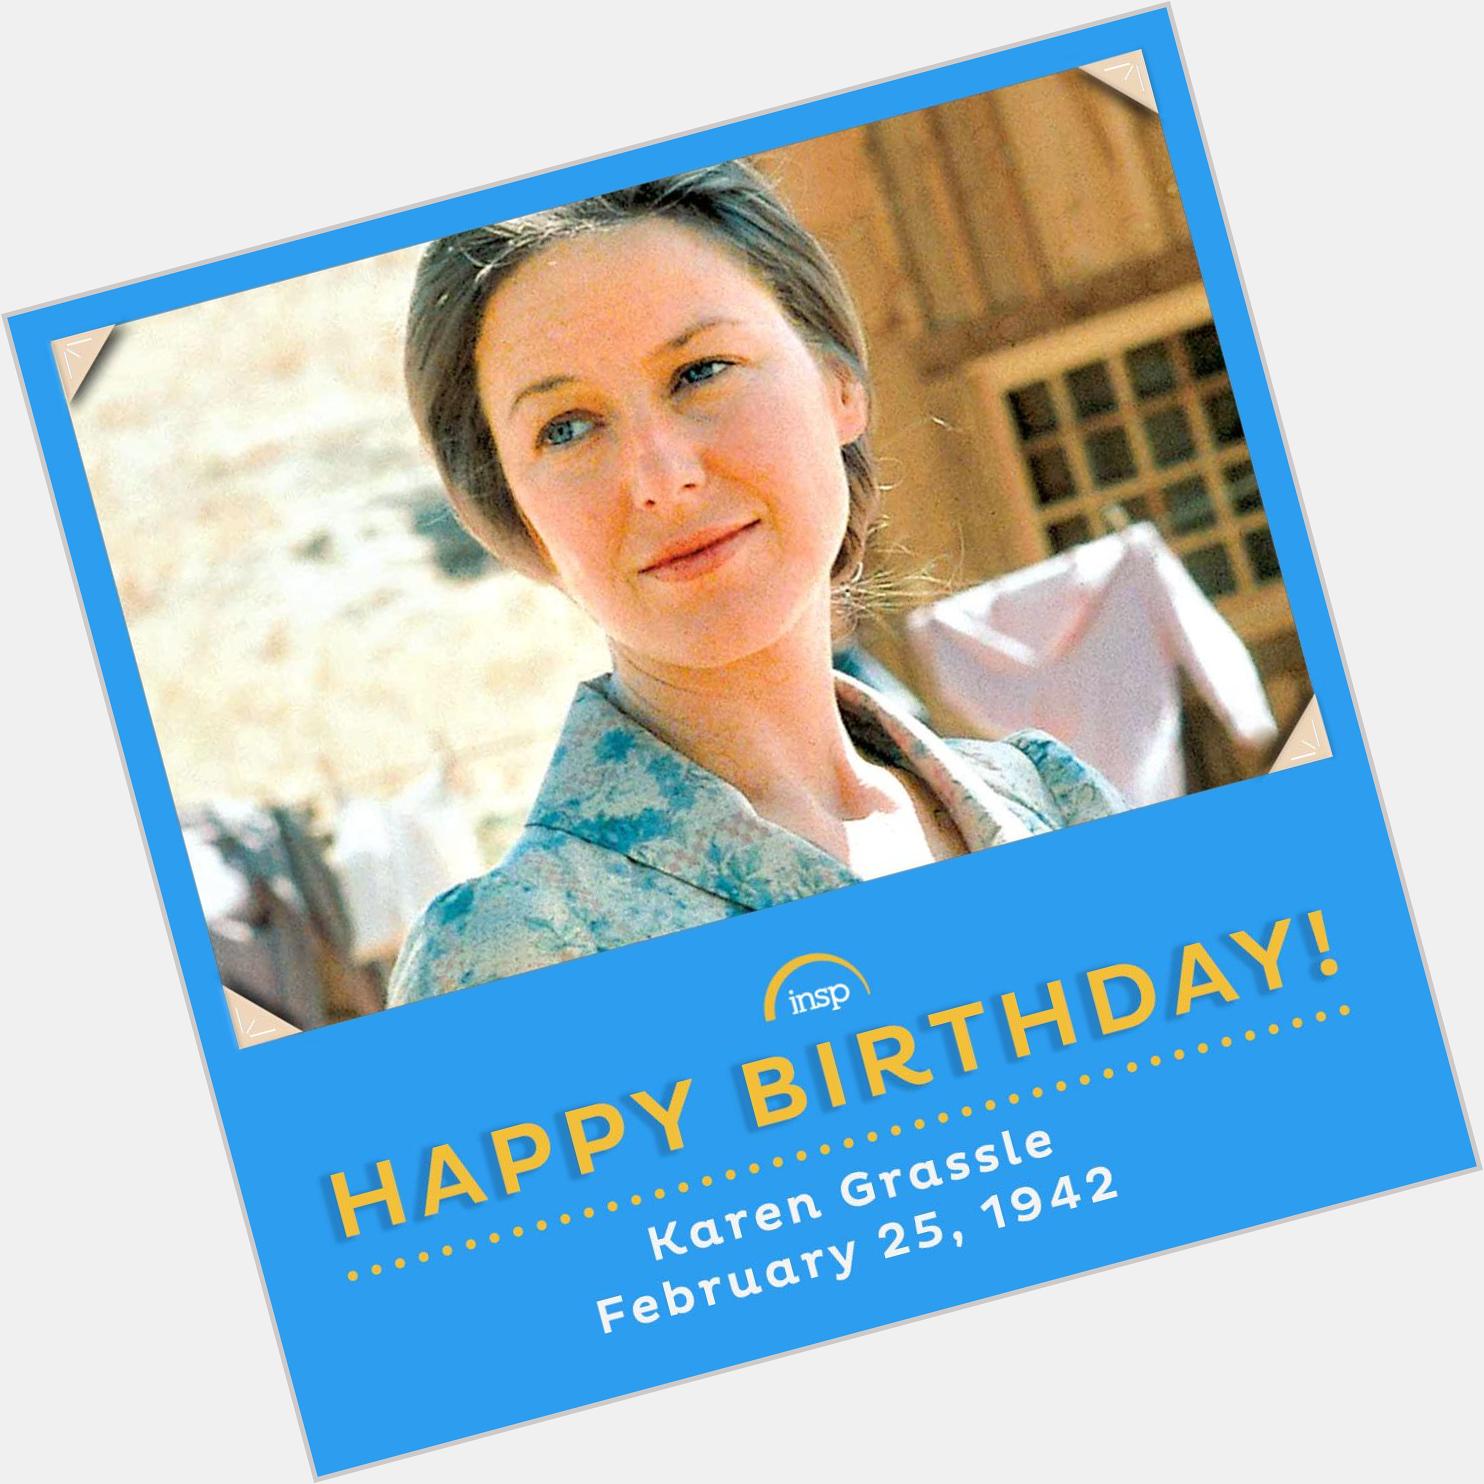 Happy birthday, Karen Grassle! to send your bday wishes to Mrs. Ingalls! 